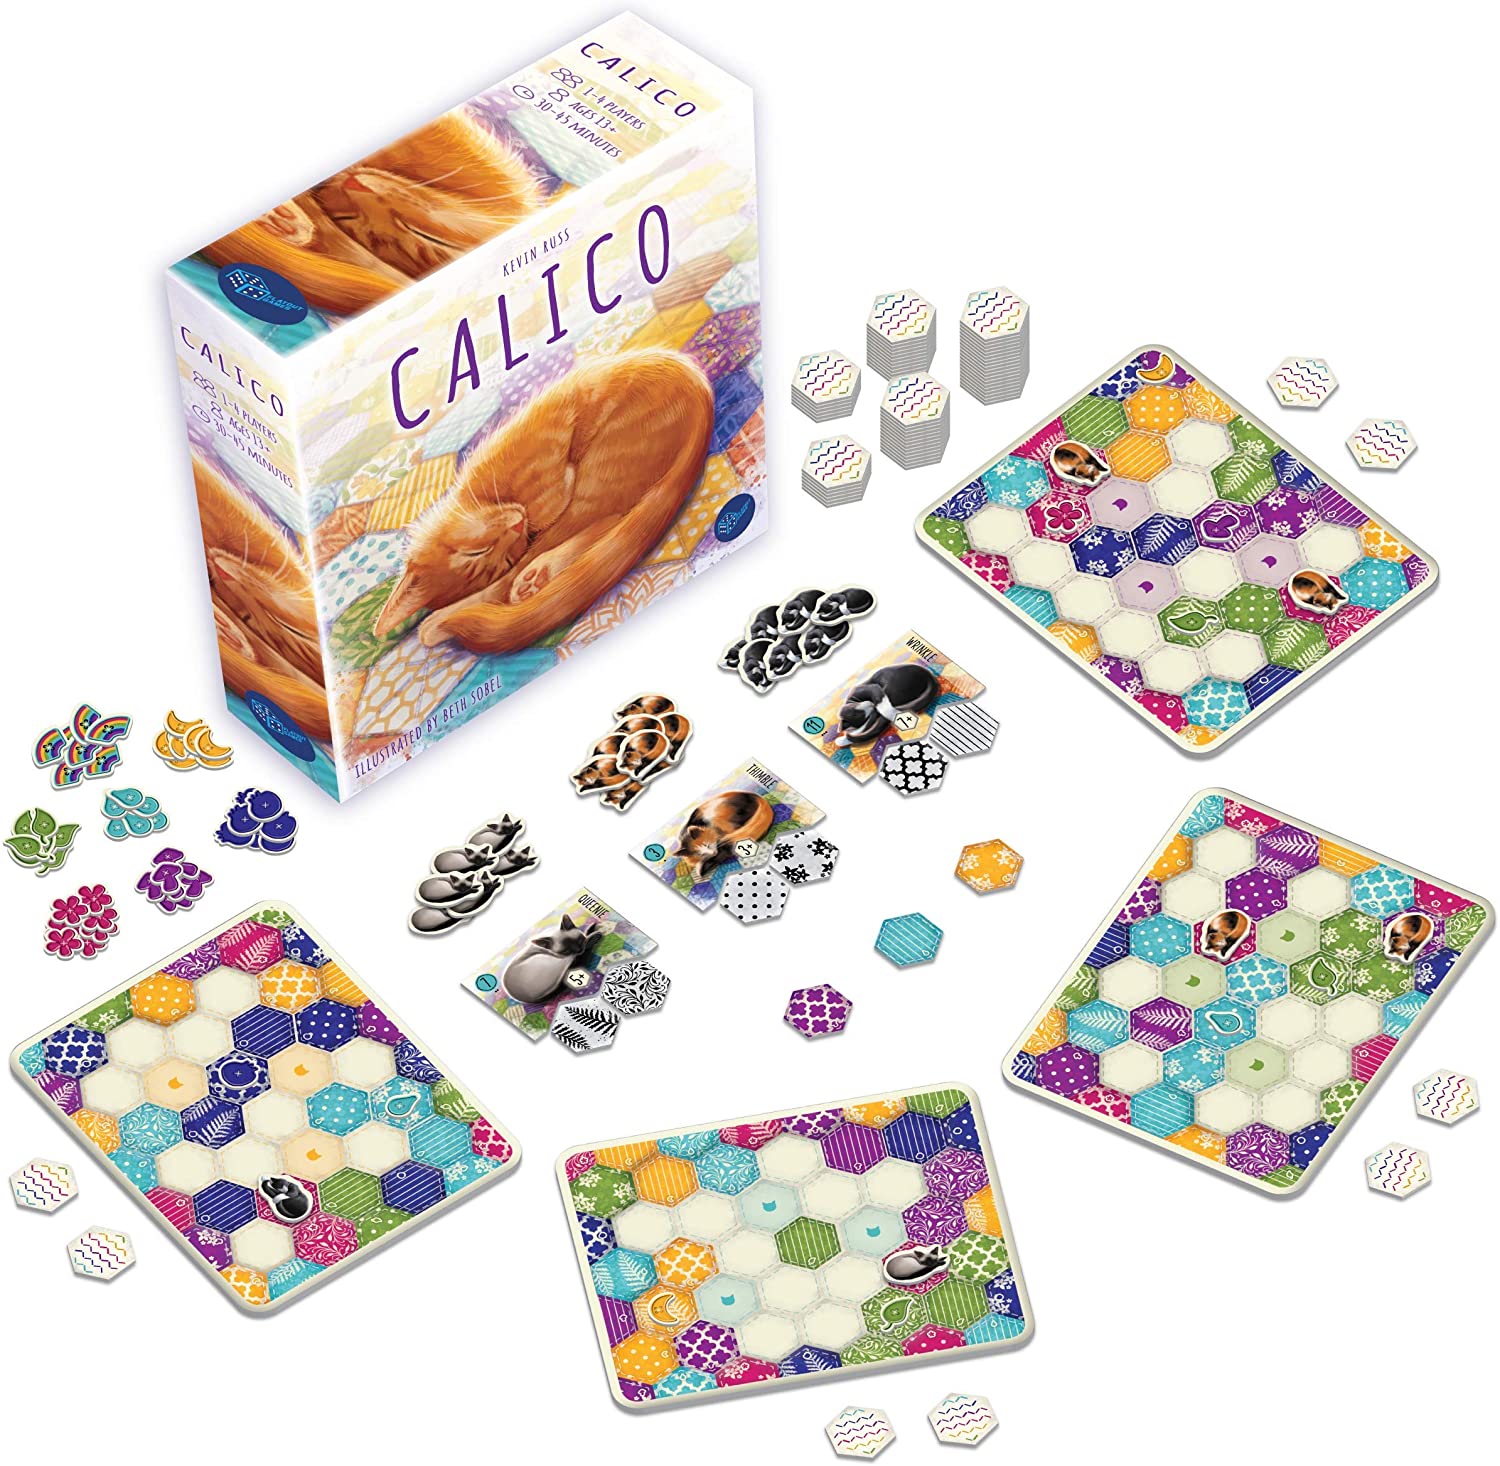 Calico Game Image 3